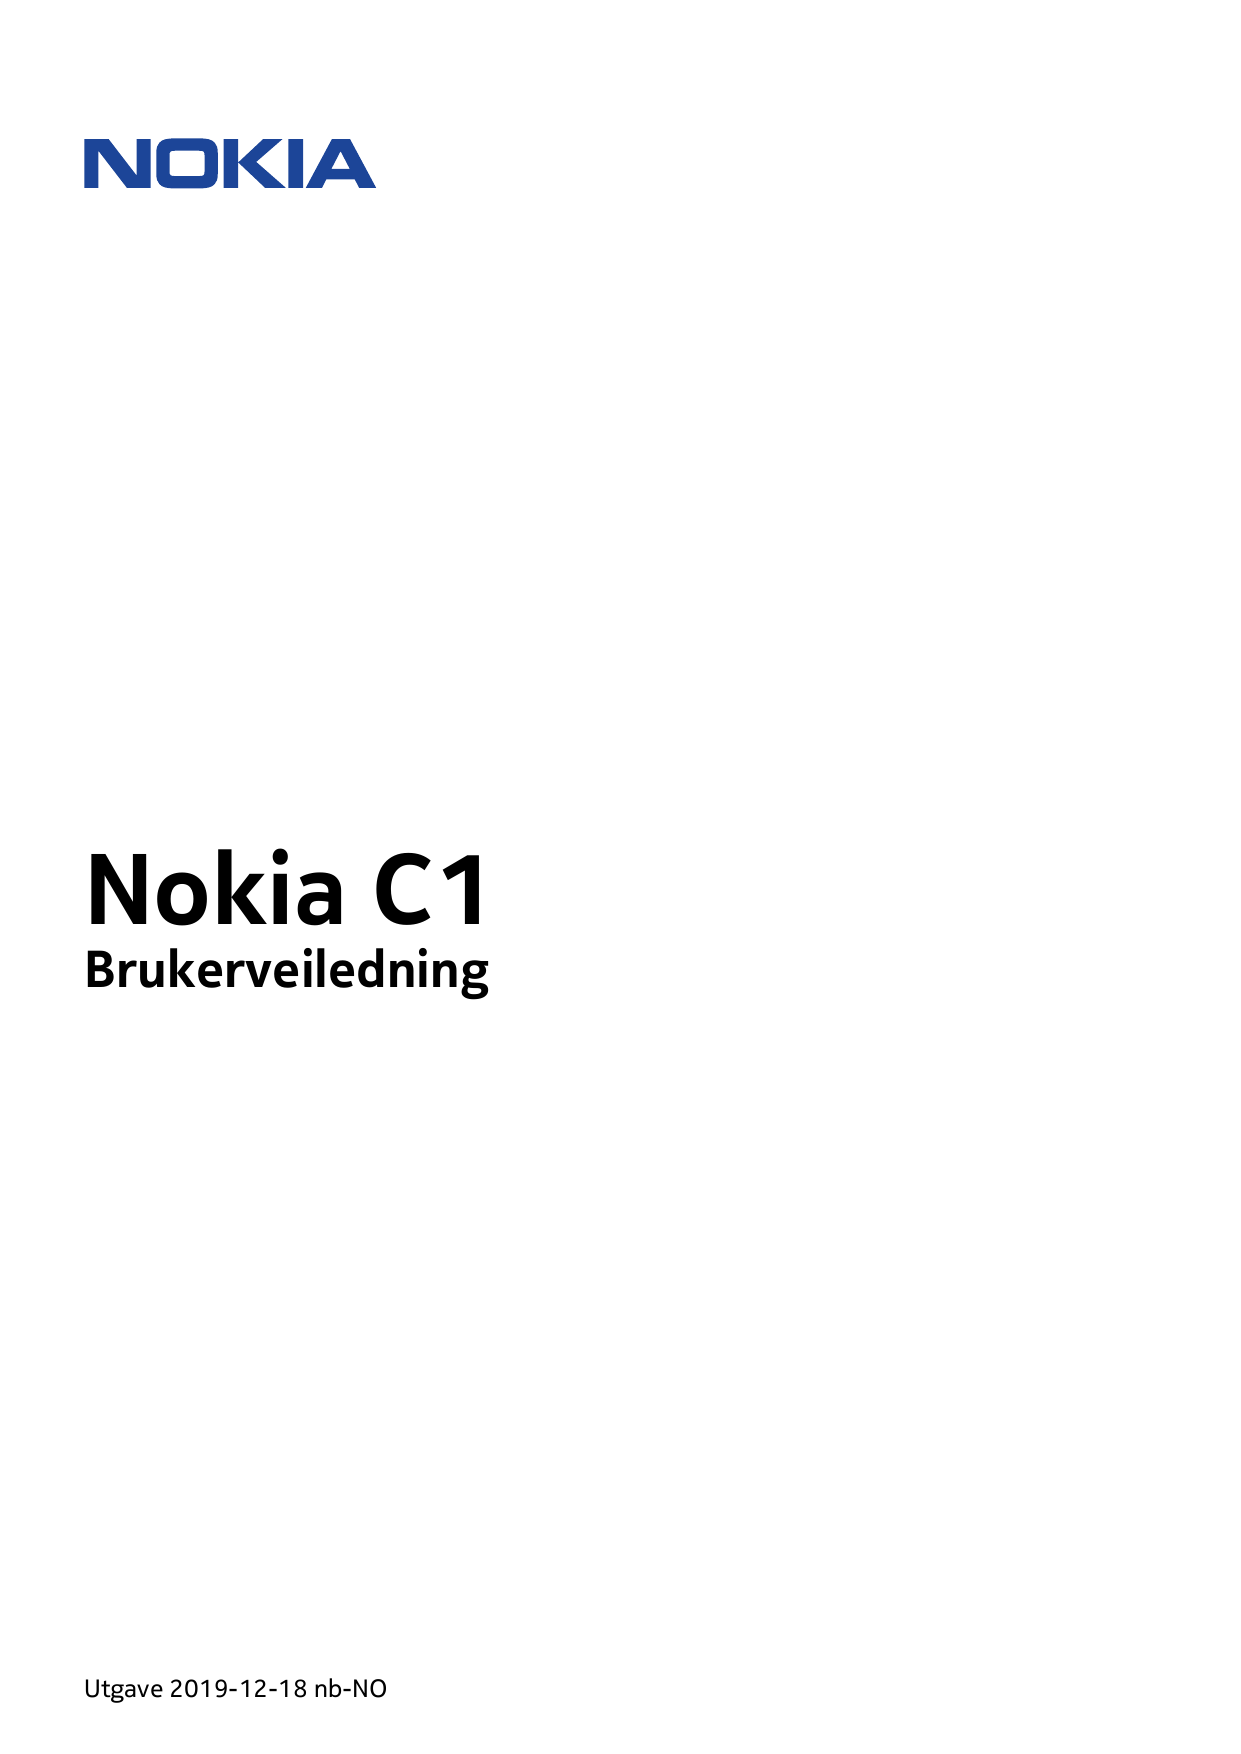 Nokia C1BrukerveiledningUtgave 2019-12-18 nb-NO